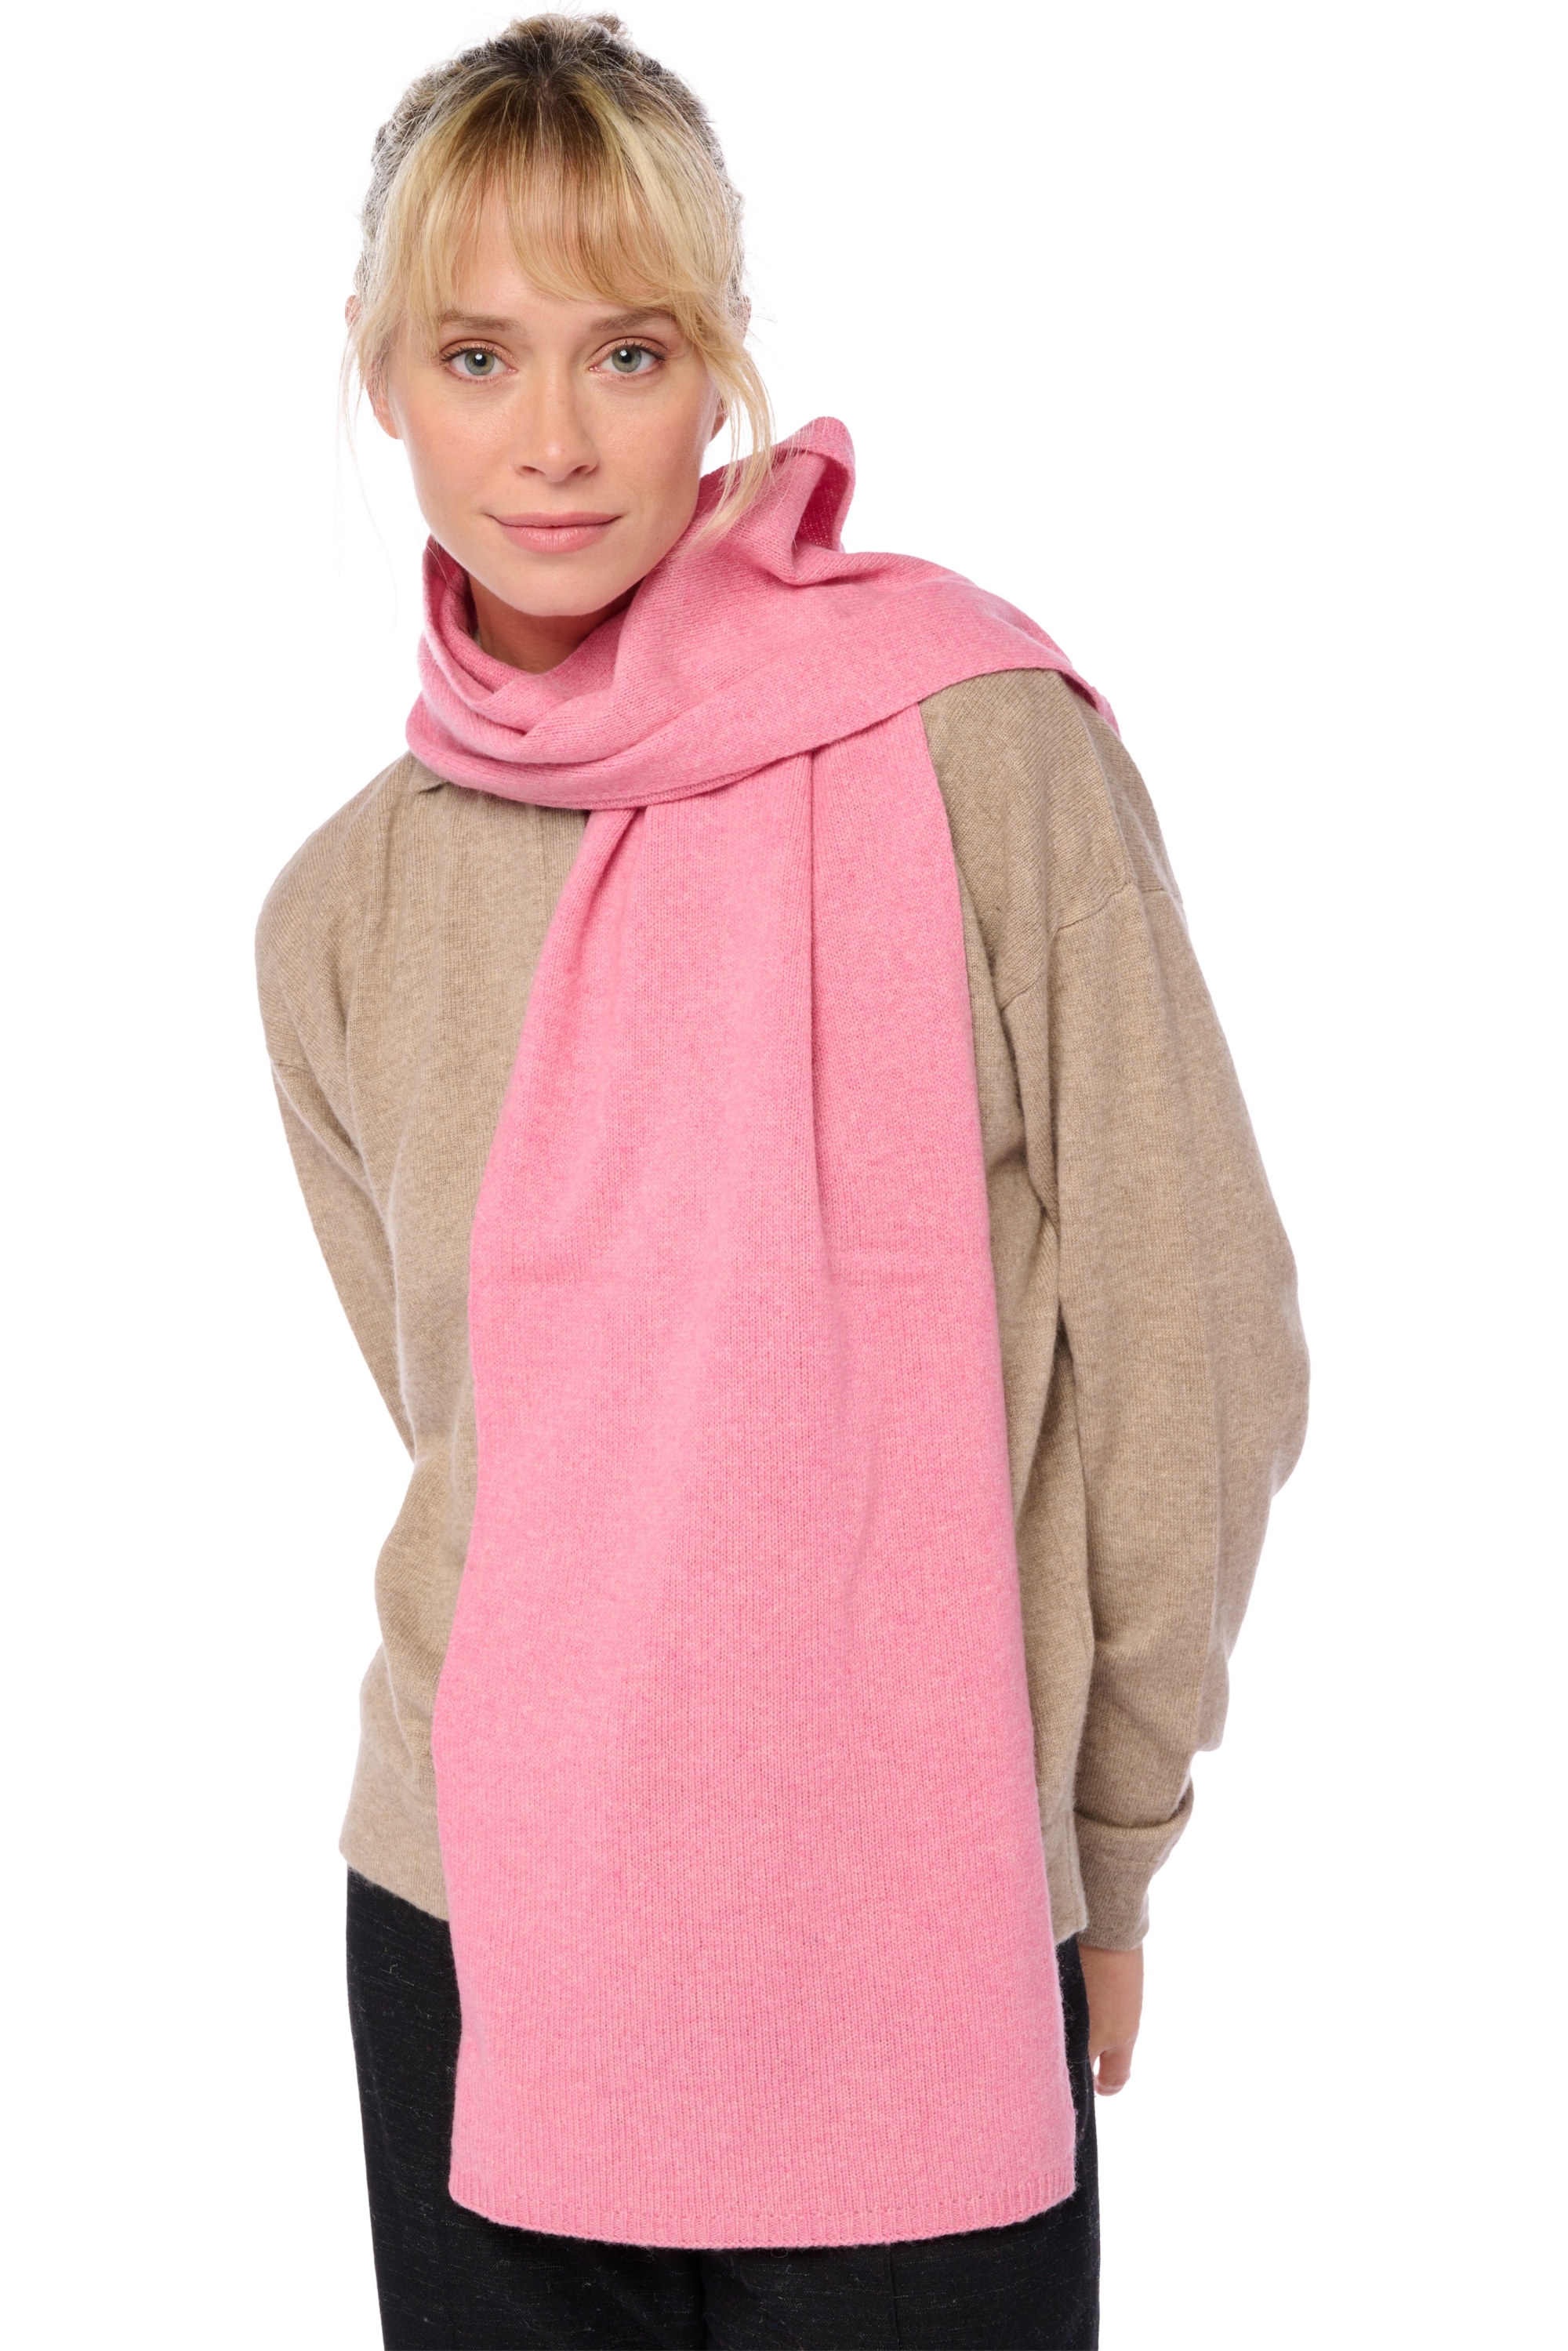 Yak accessories scarf mufflers yakozone pink 160 x 30 cm